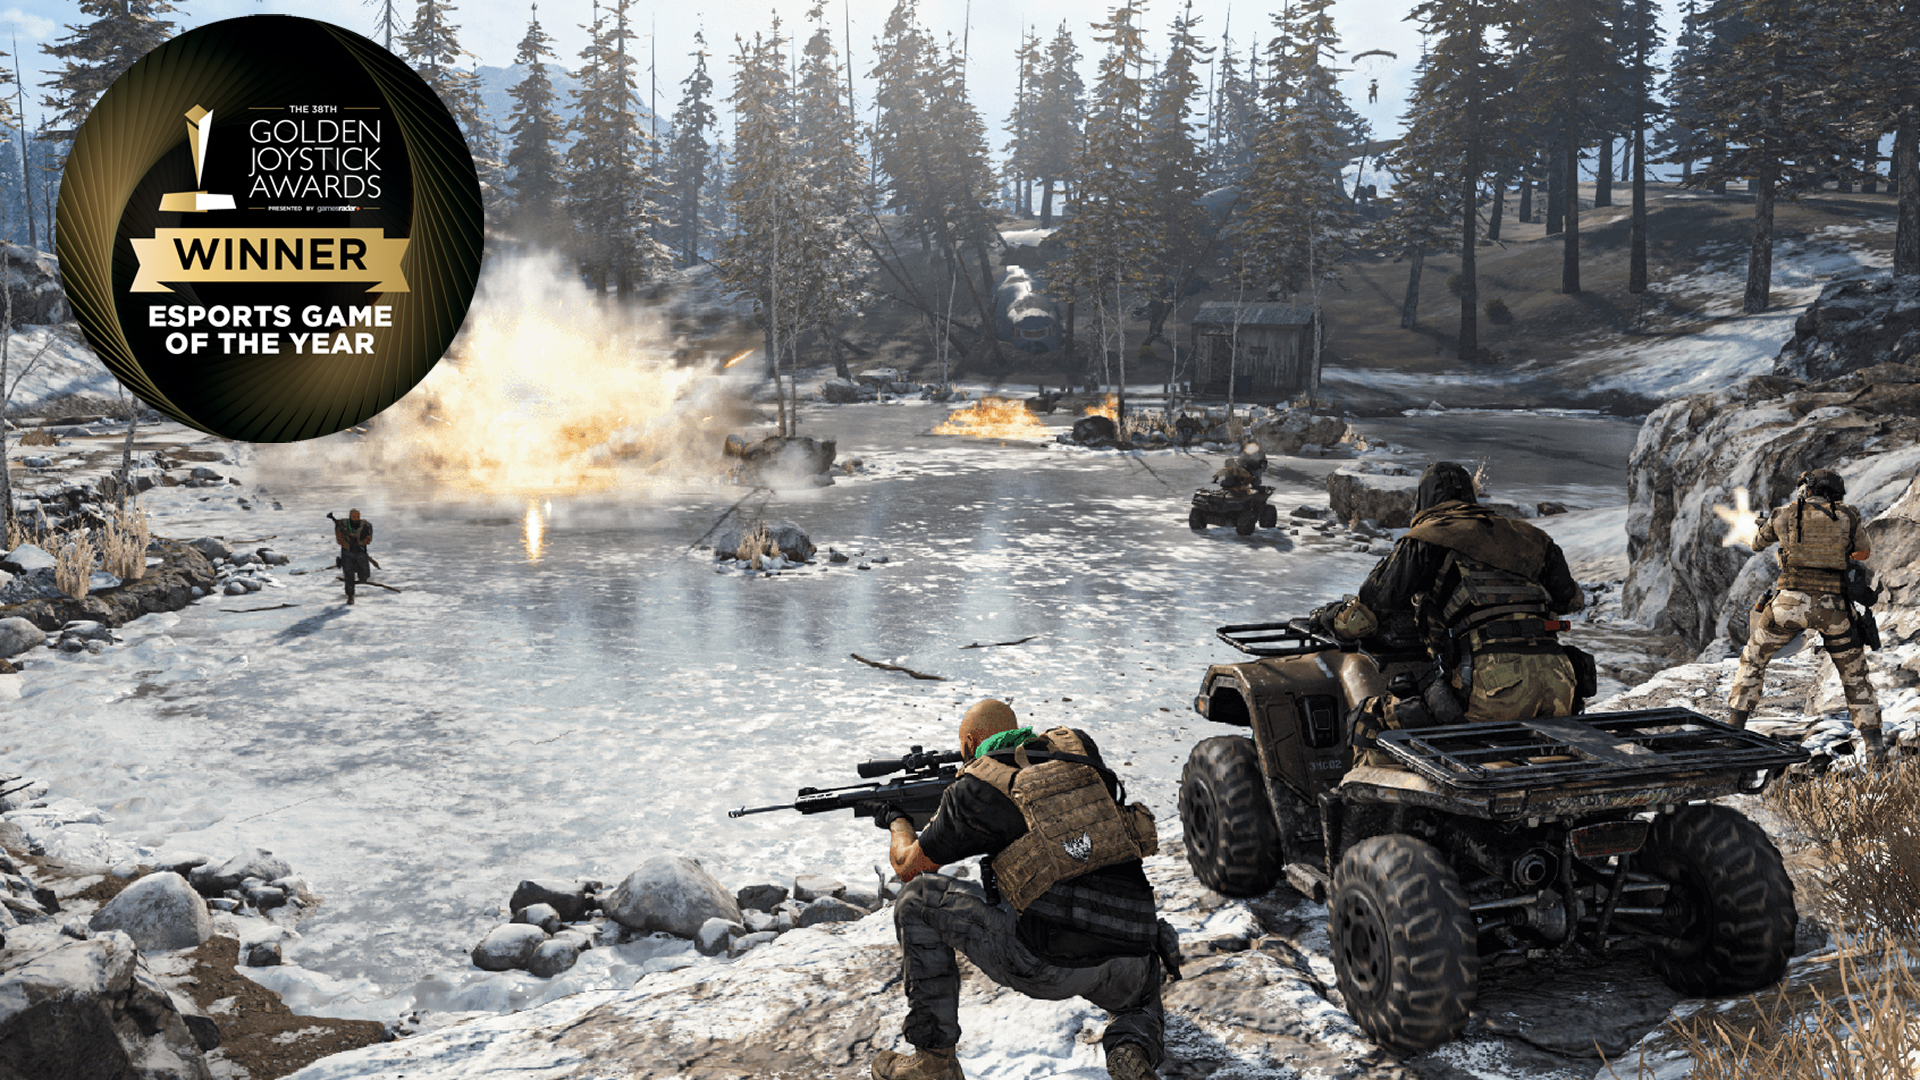 Call of Duty Modern Warfare introduces 2v2 multiplayer mode, Gunfight - CNET